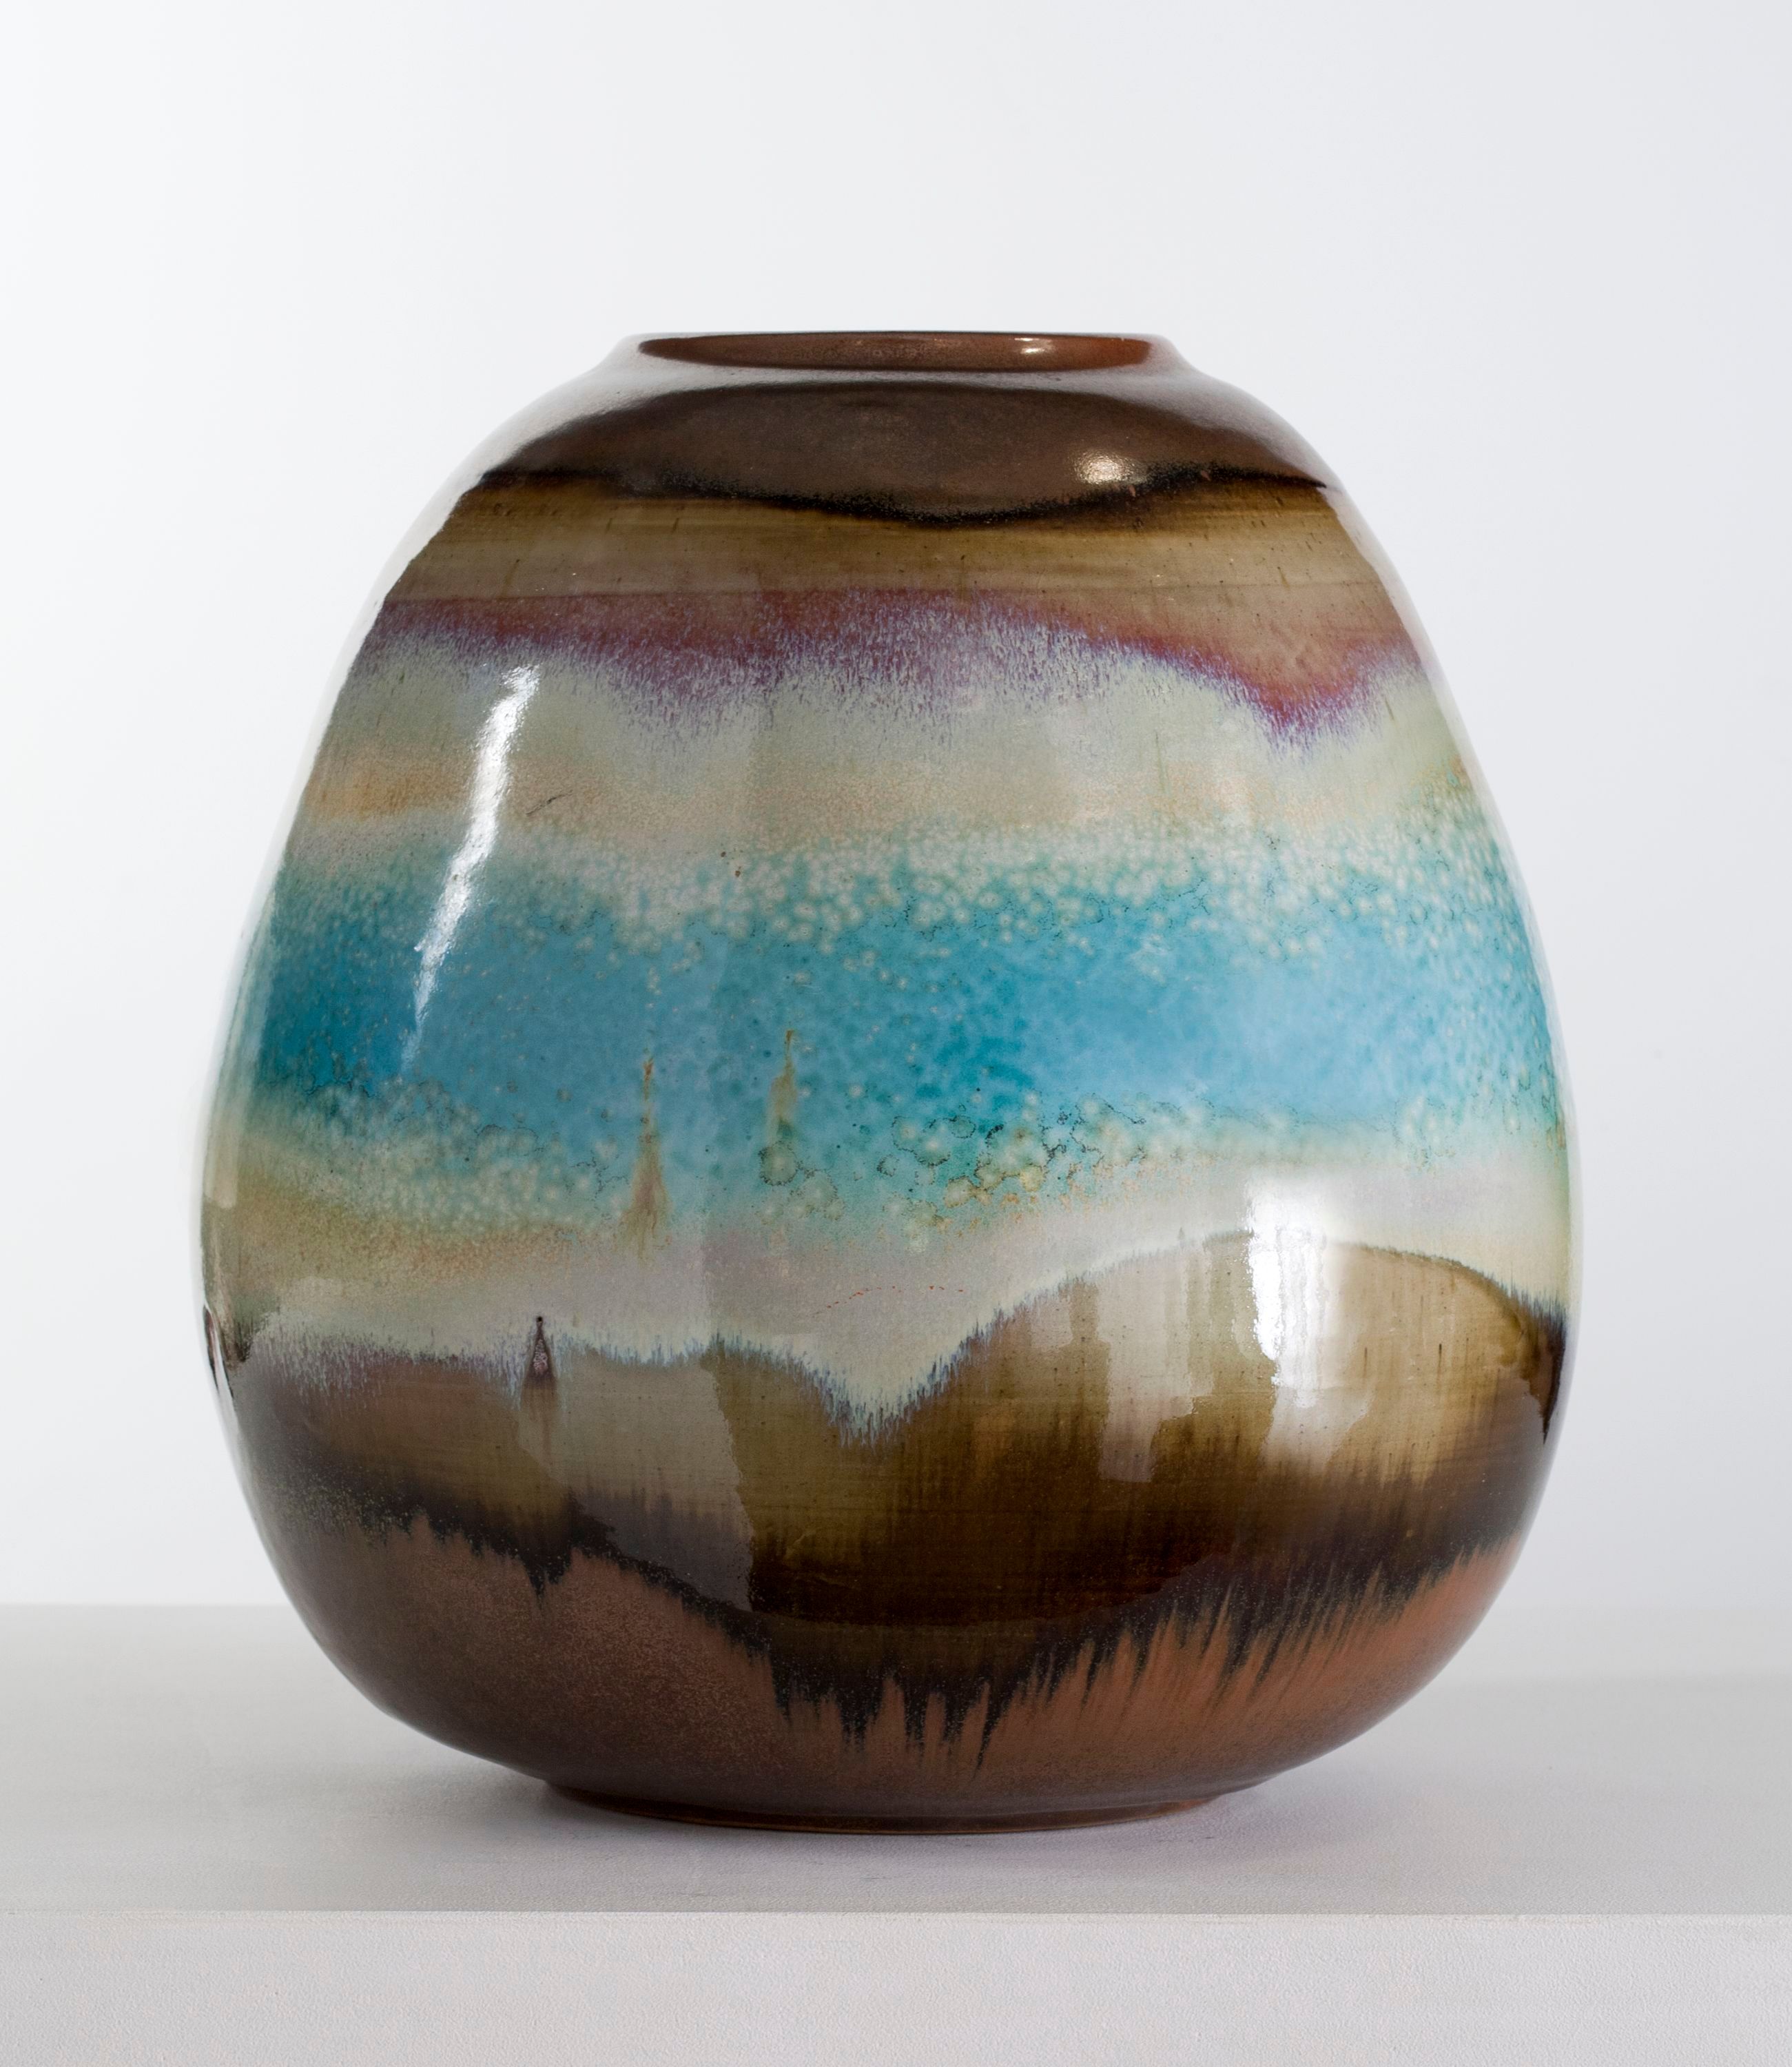 Gerald Pott, Glazed stoneware vase, France, c. 1970